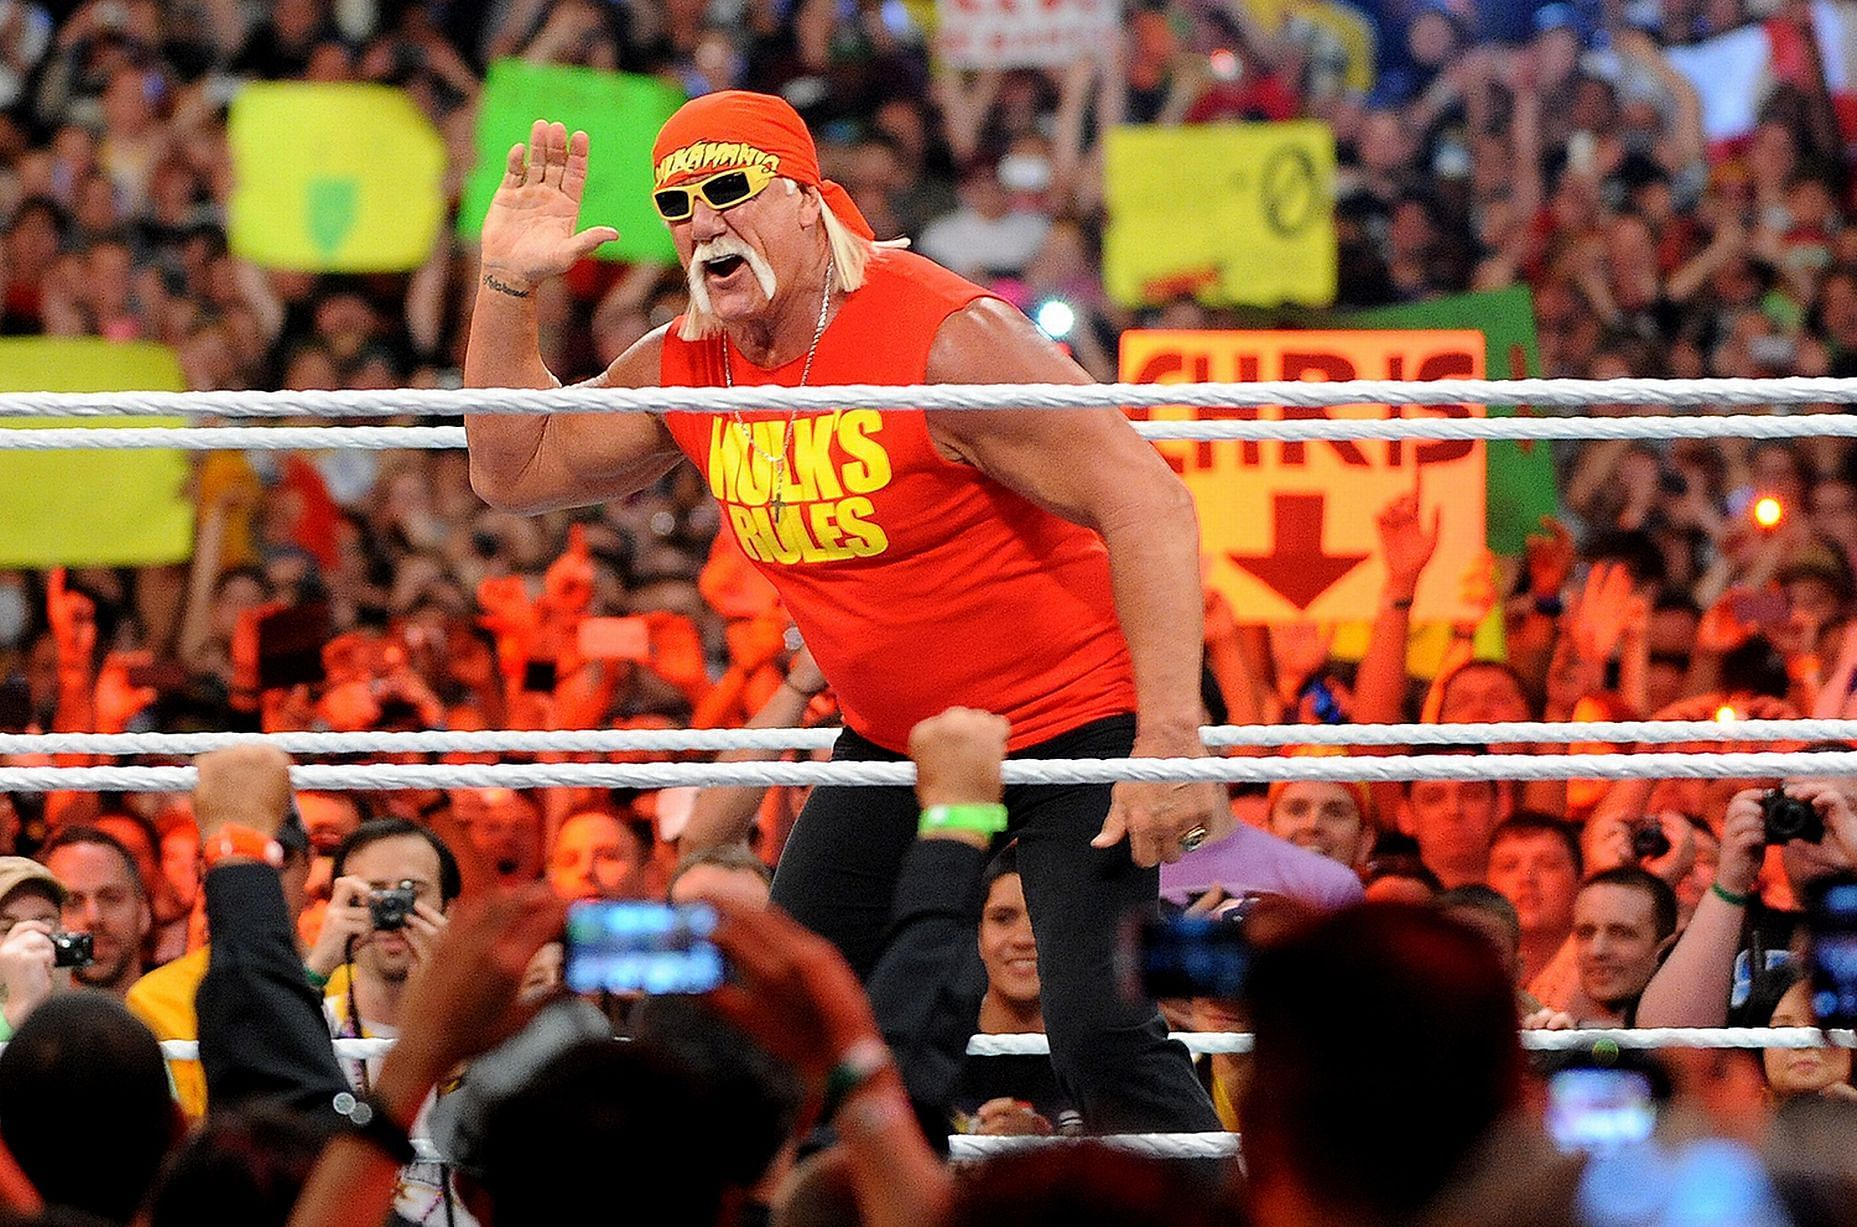 No one is bigger in professional wrestling than Hulk Hogan!